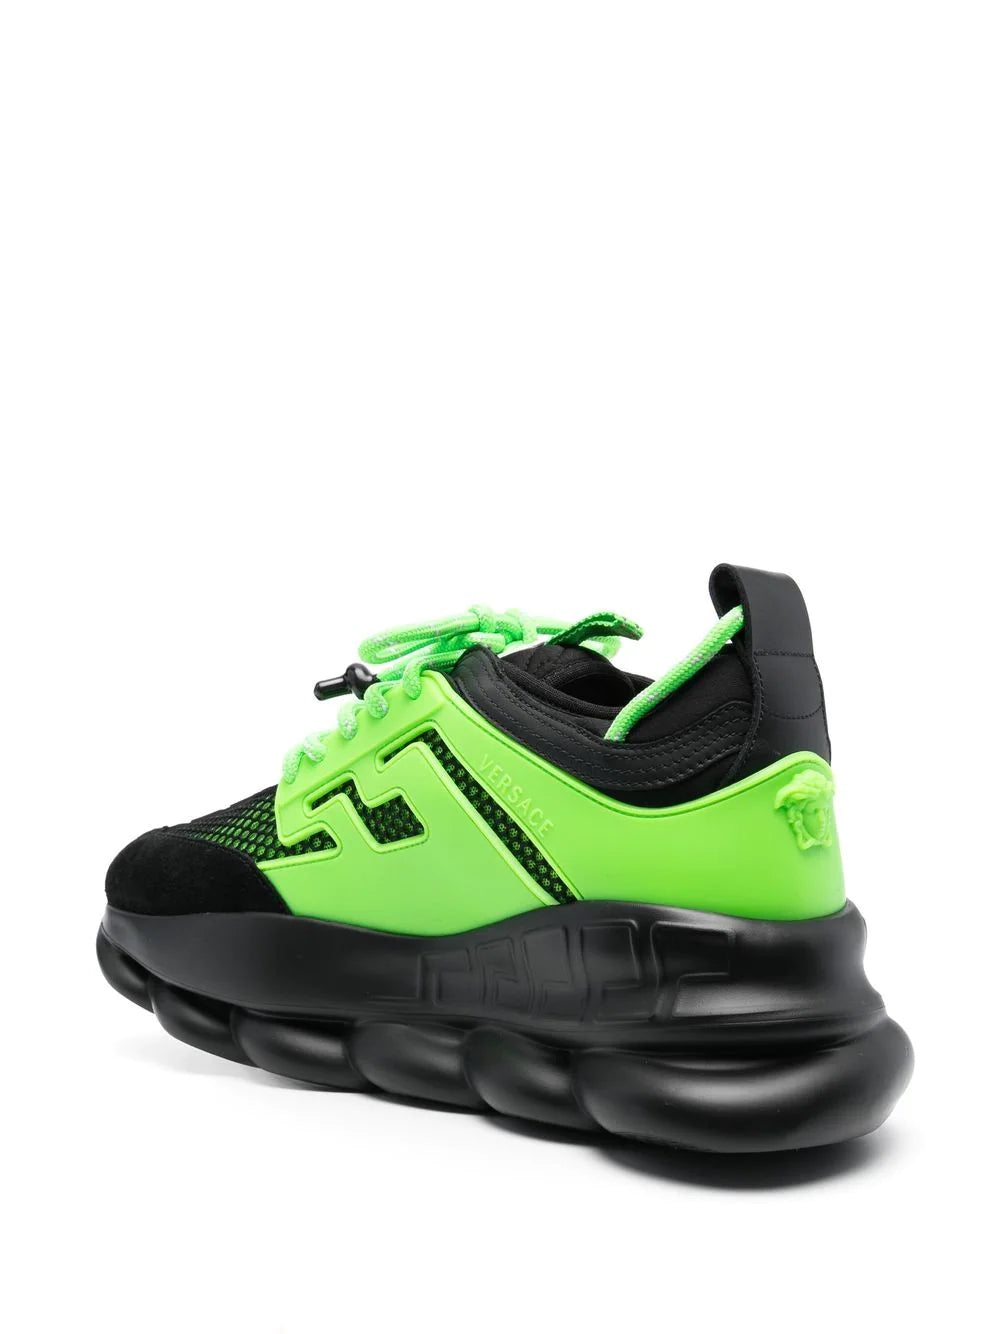 Versace Chain Reaction Sneakers Black/Neon